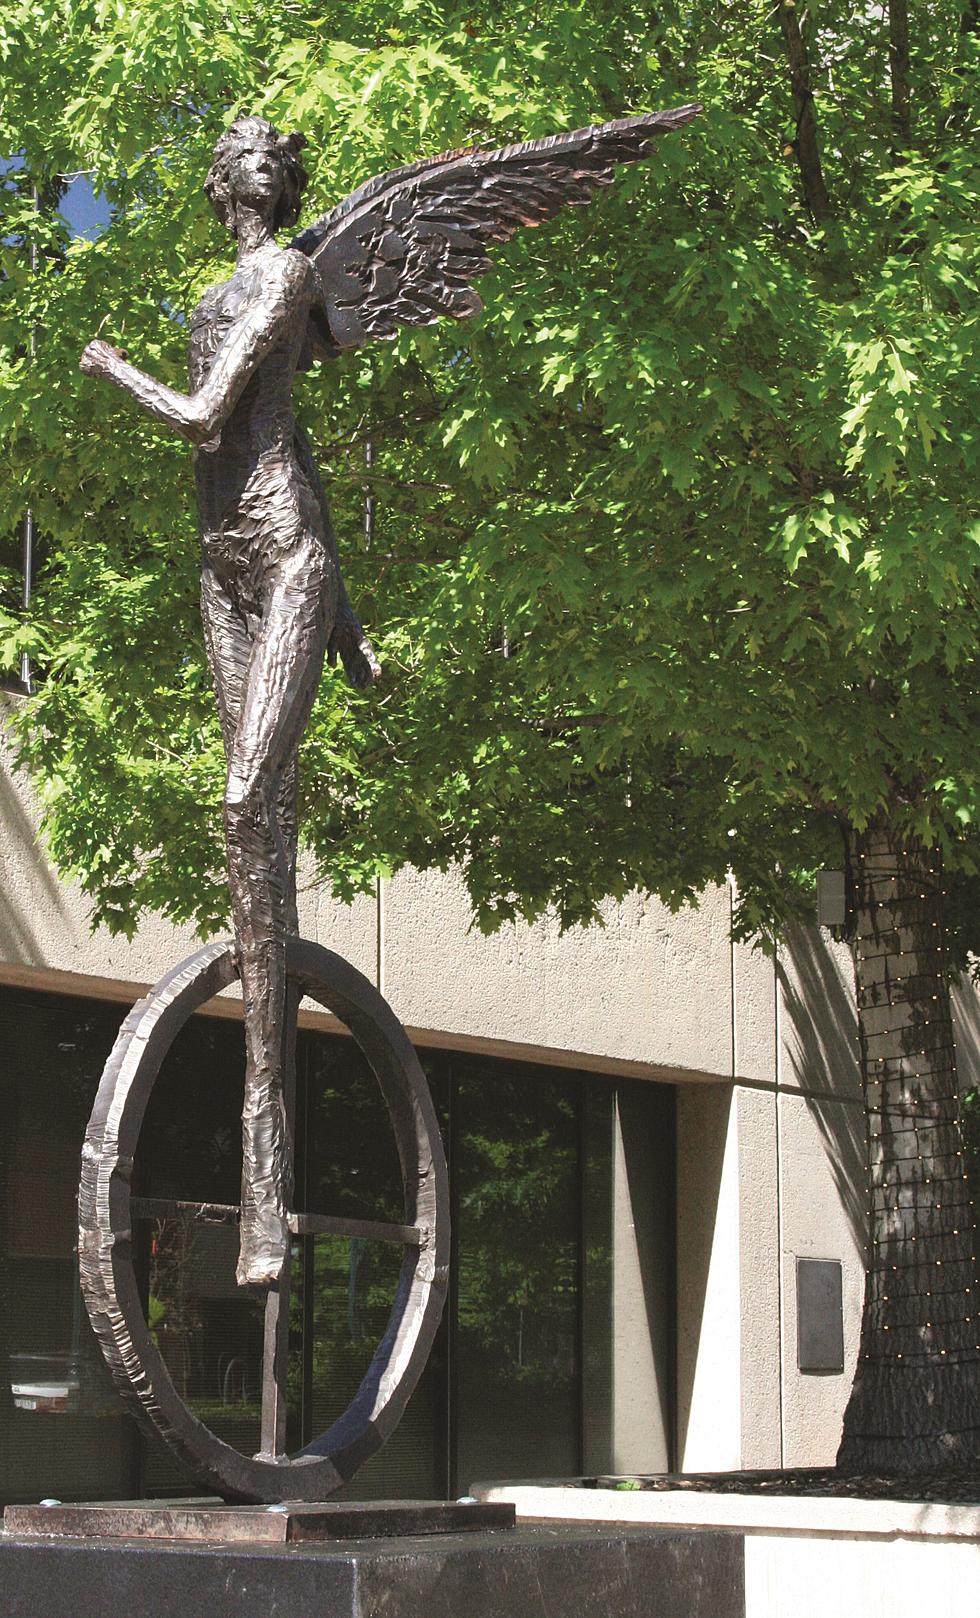 Greeley’s Public Art Program Names 2015 Sculpture on Loan People’s Choice